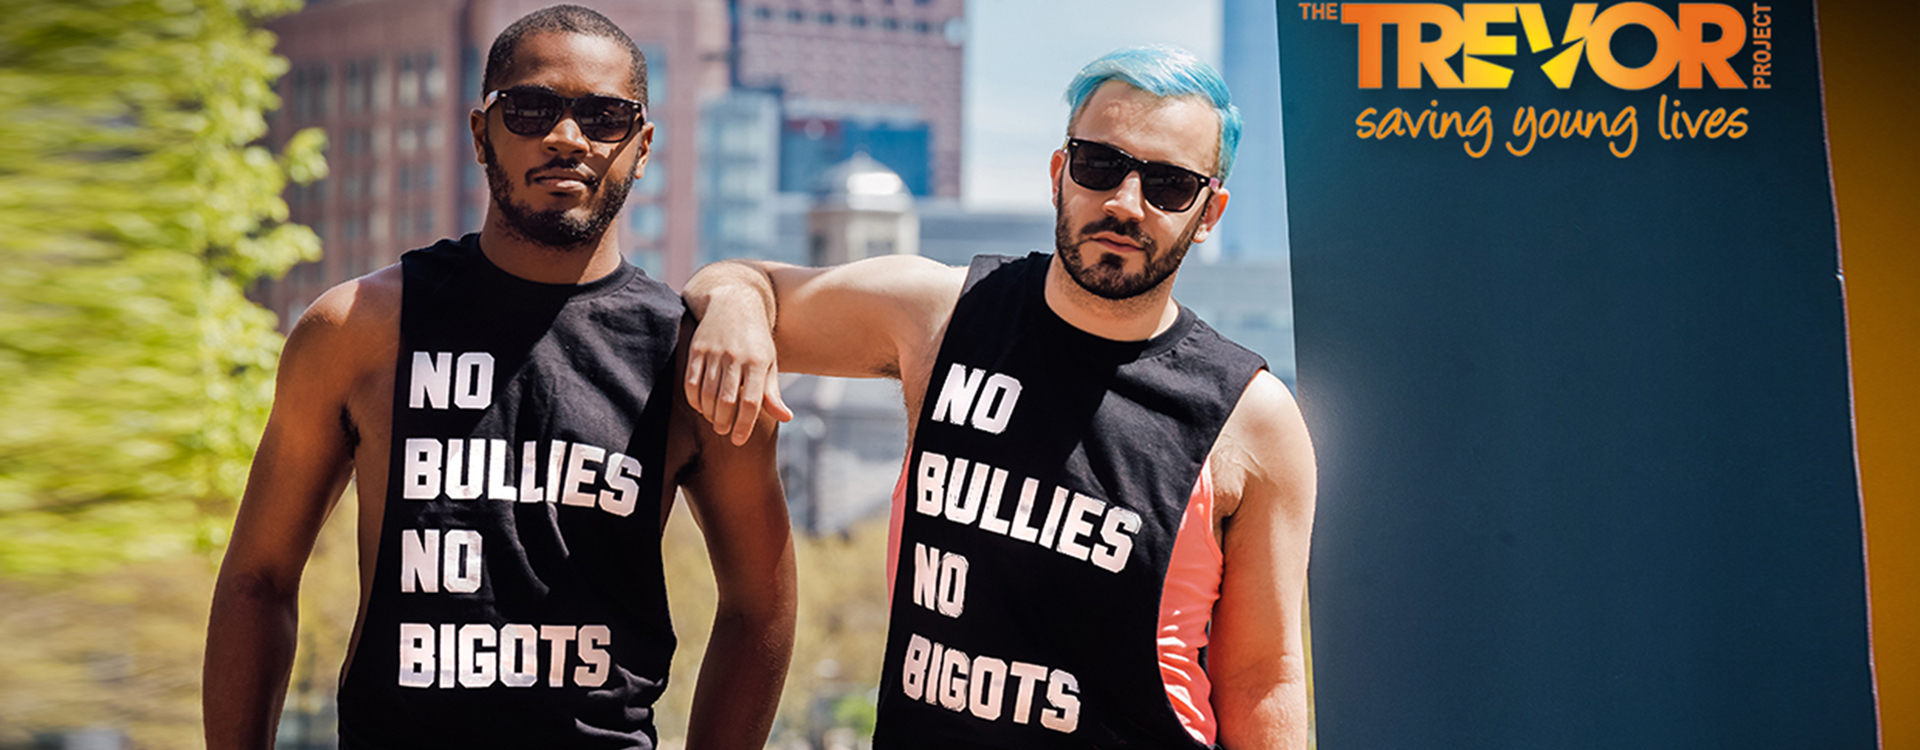 #NoBulliesNoBigots, No Fats, No Fems, Bully, Trevor Project, Shirt, Charity, Bullying